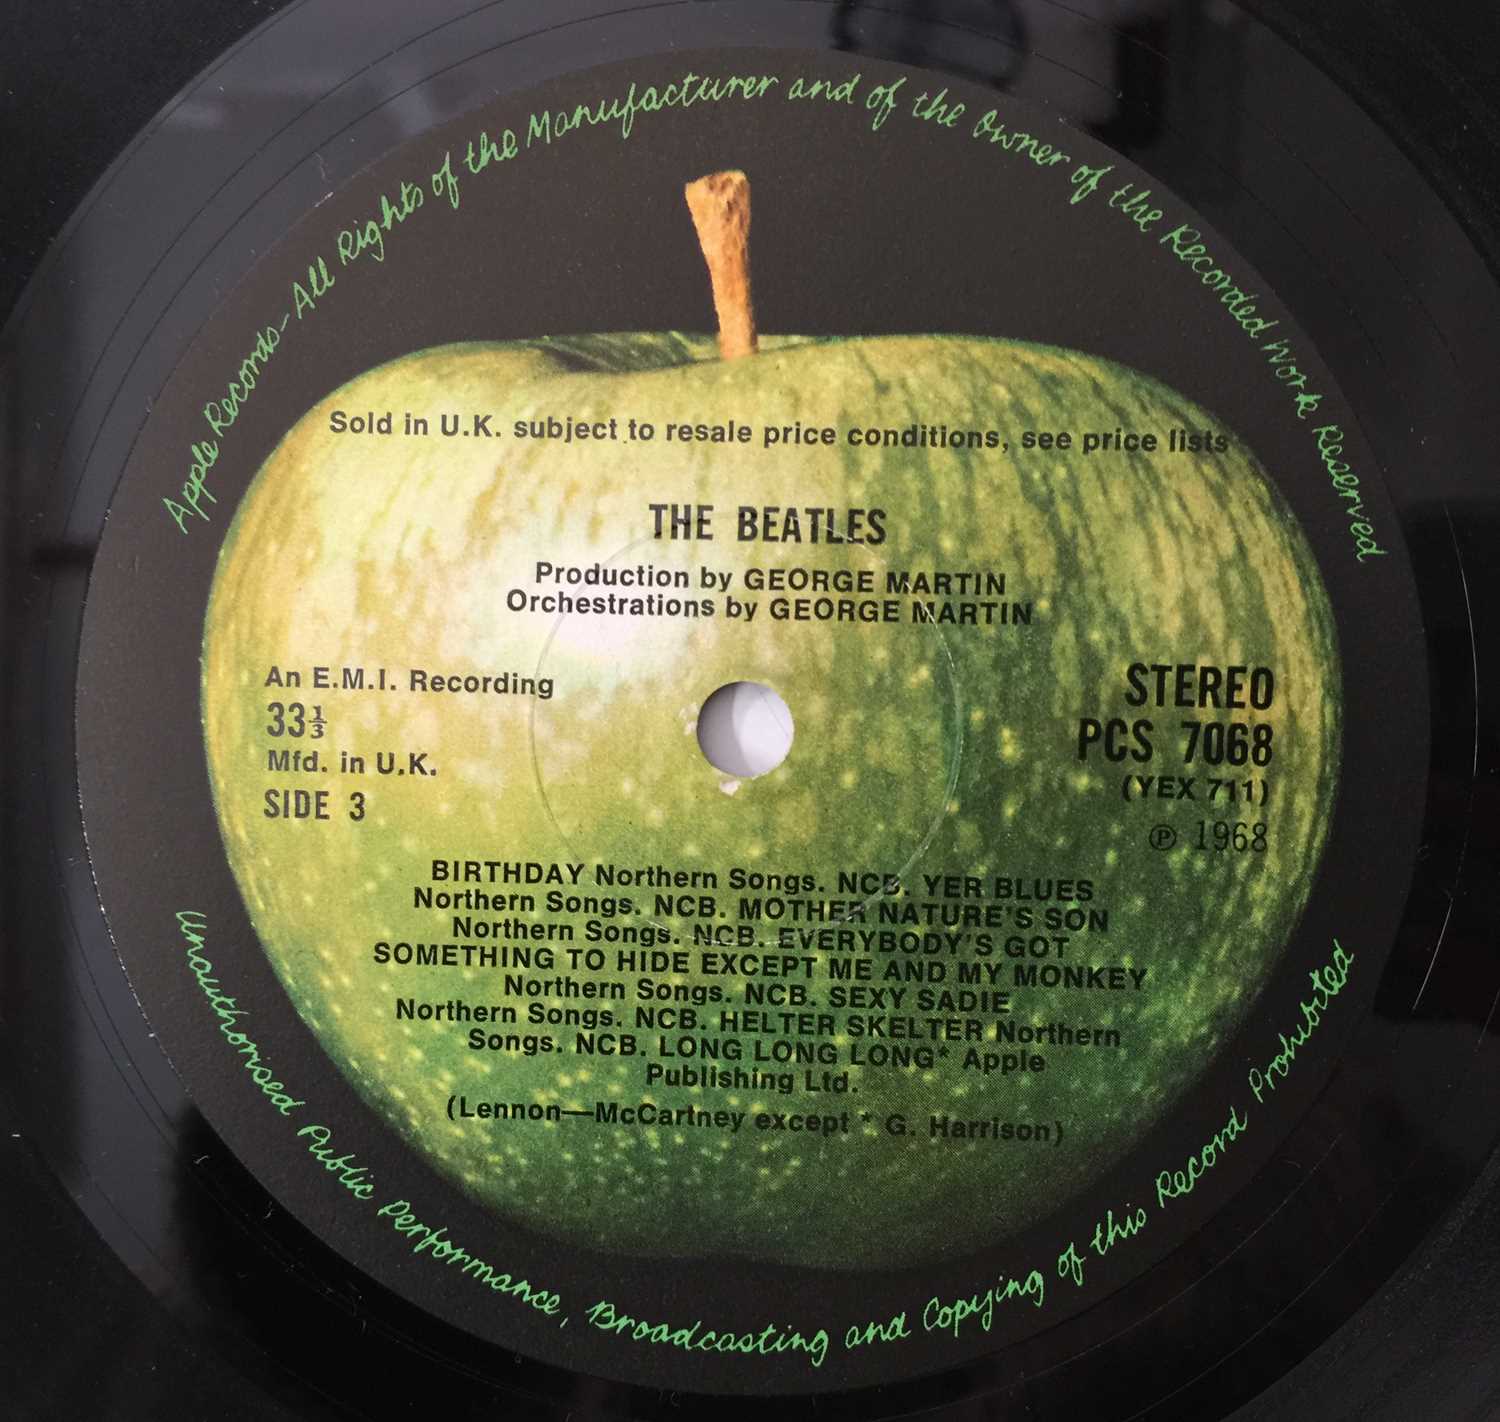 THE BEATLES - WHITE ALBUM LP (UK STEREO TOP LOADING COPY - PCS 7067/8) - Image 9 of 10